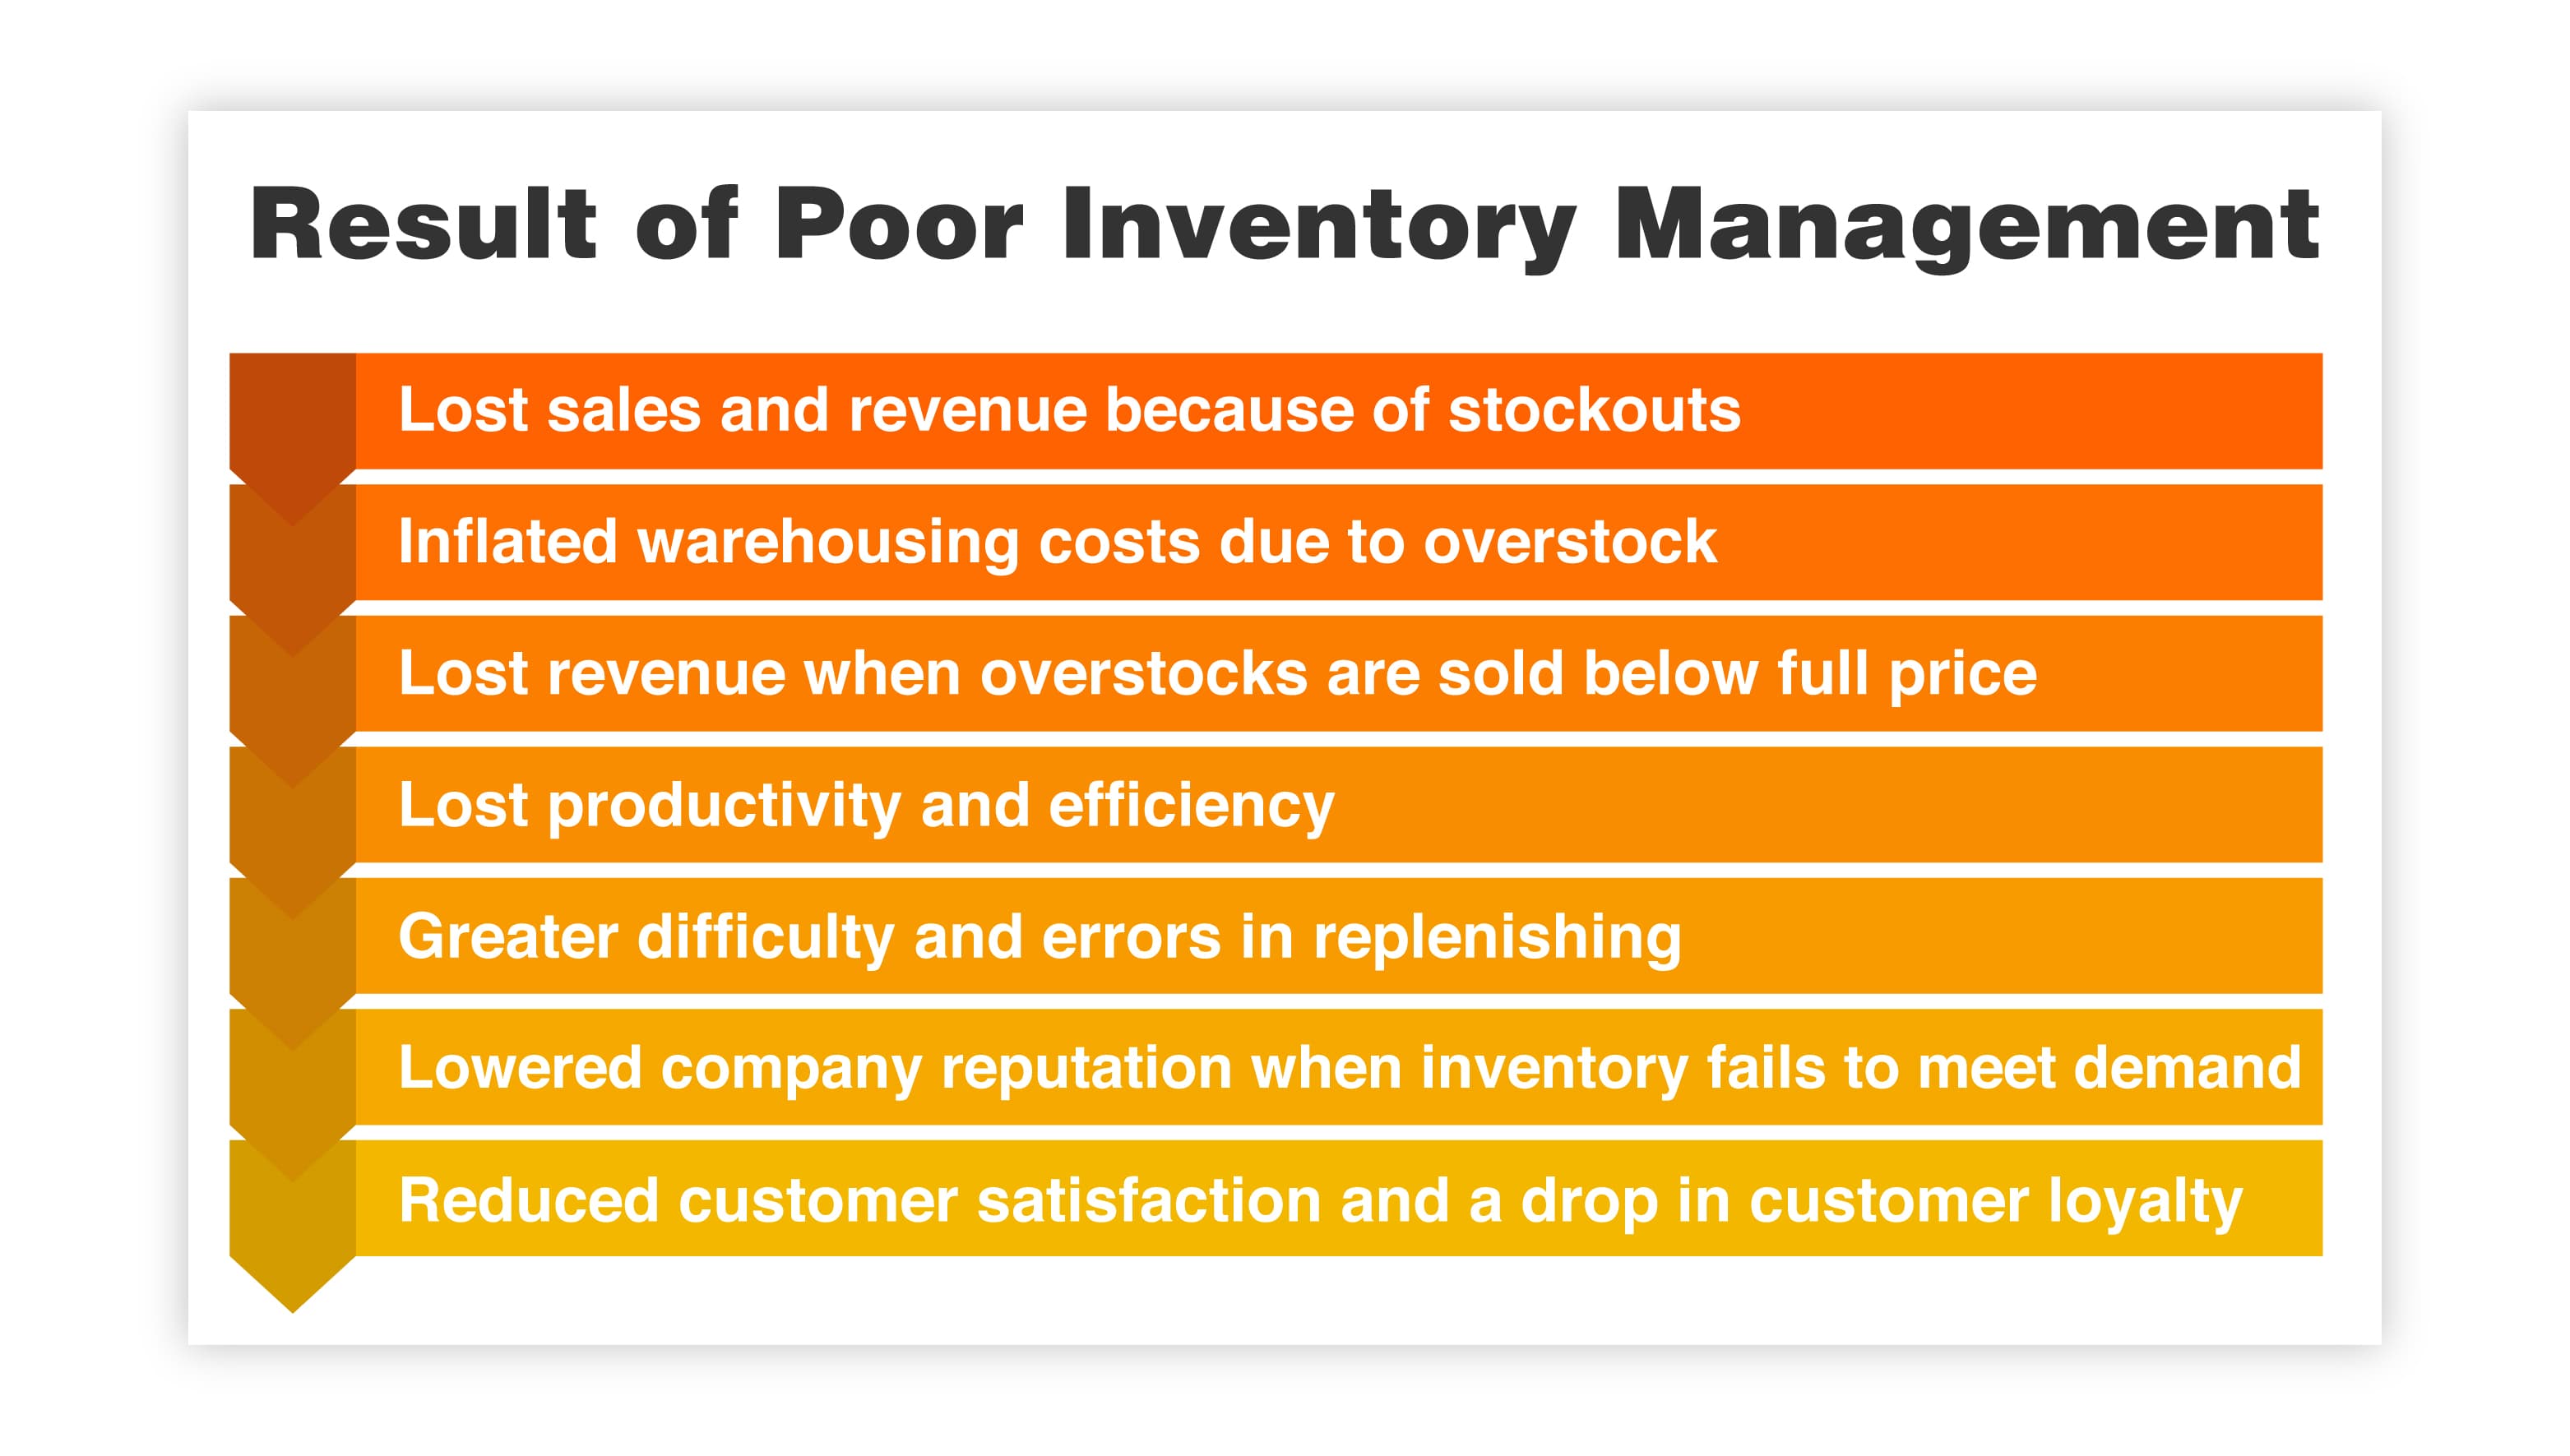 Result of Poor Inventory Management